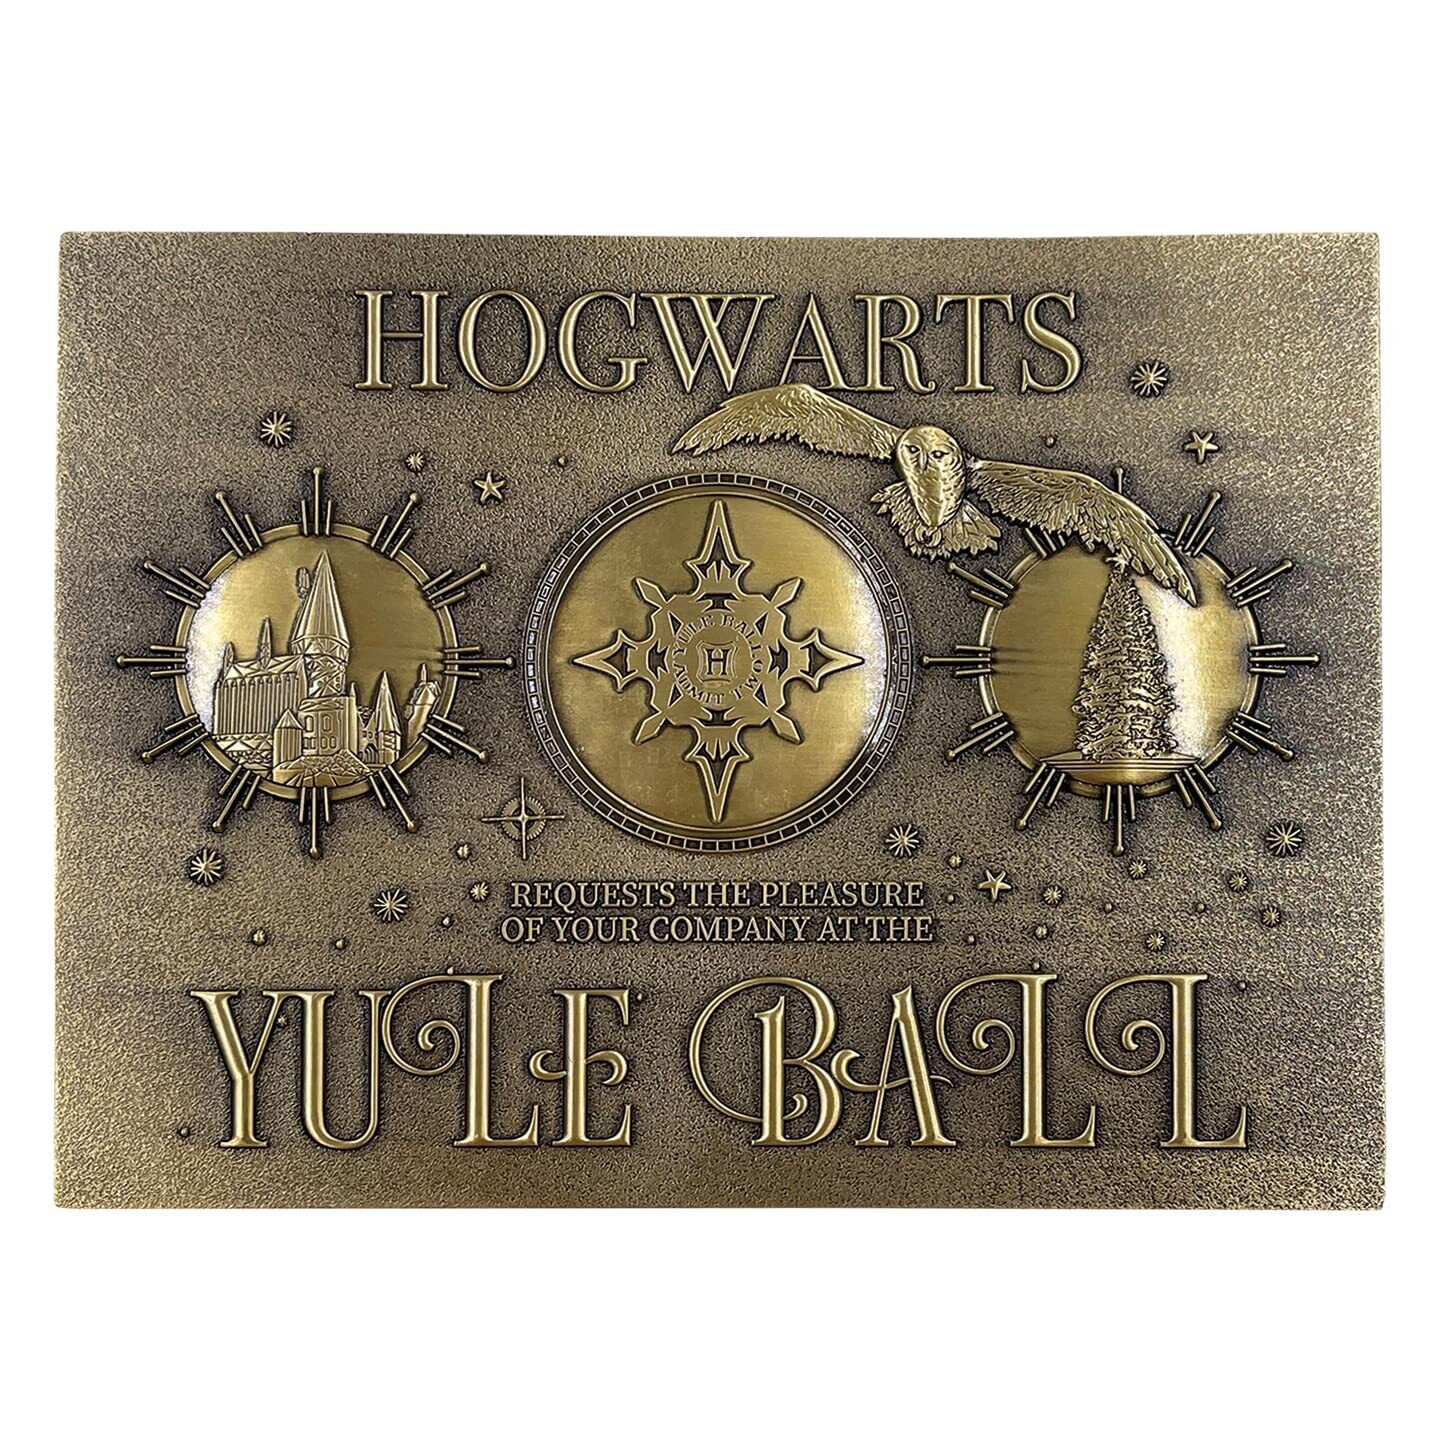 Fanattik Official Harry Potter Yule Ball Ticket Limited Edition - Harry Potter C